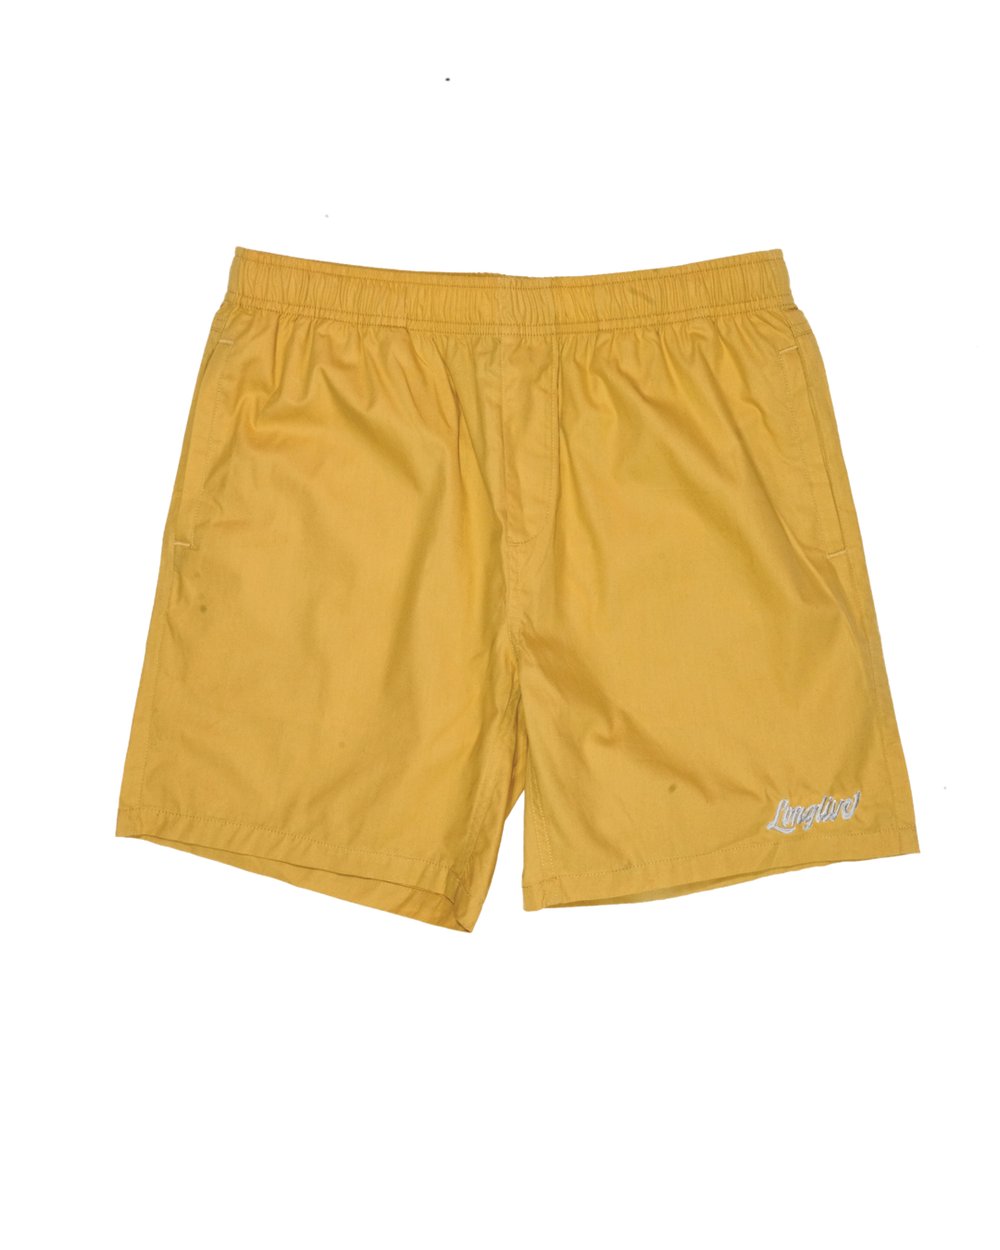 Image of Long Live Beach Shorts - Yellow